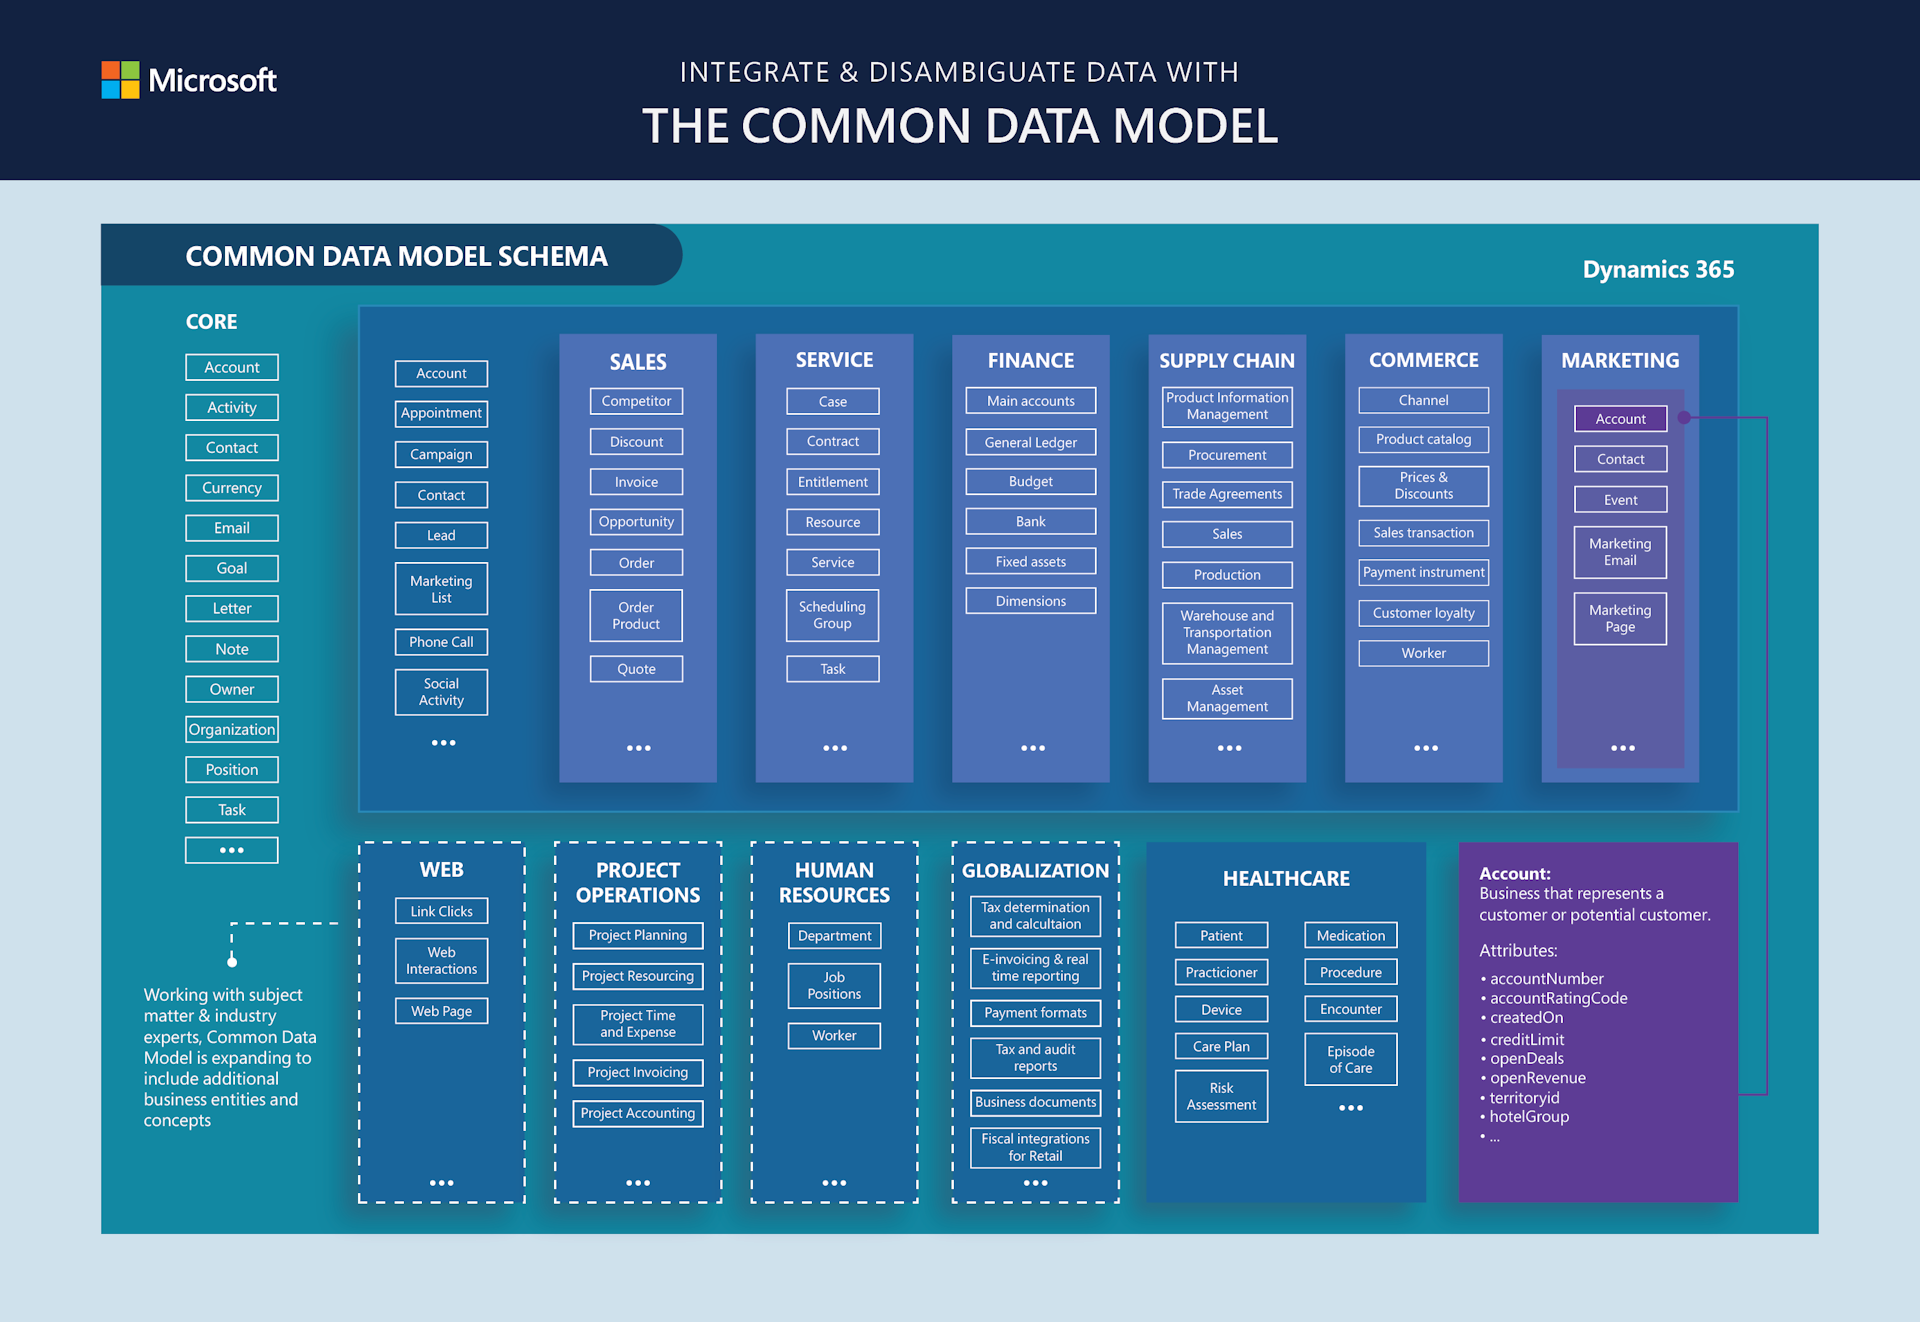 Common Data Model Entities